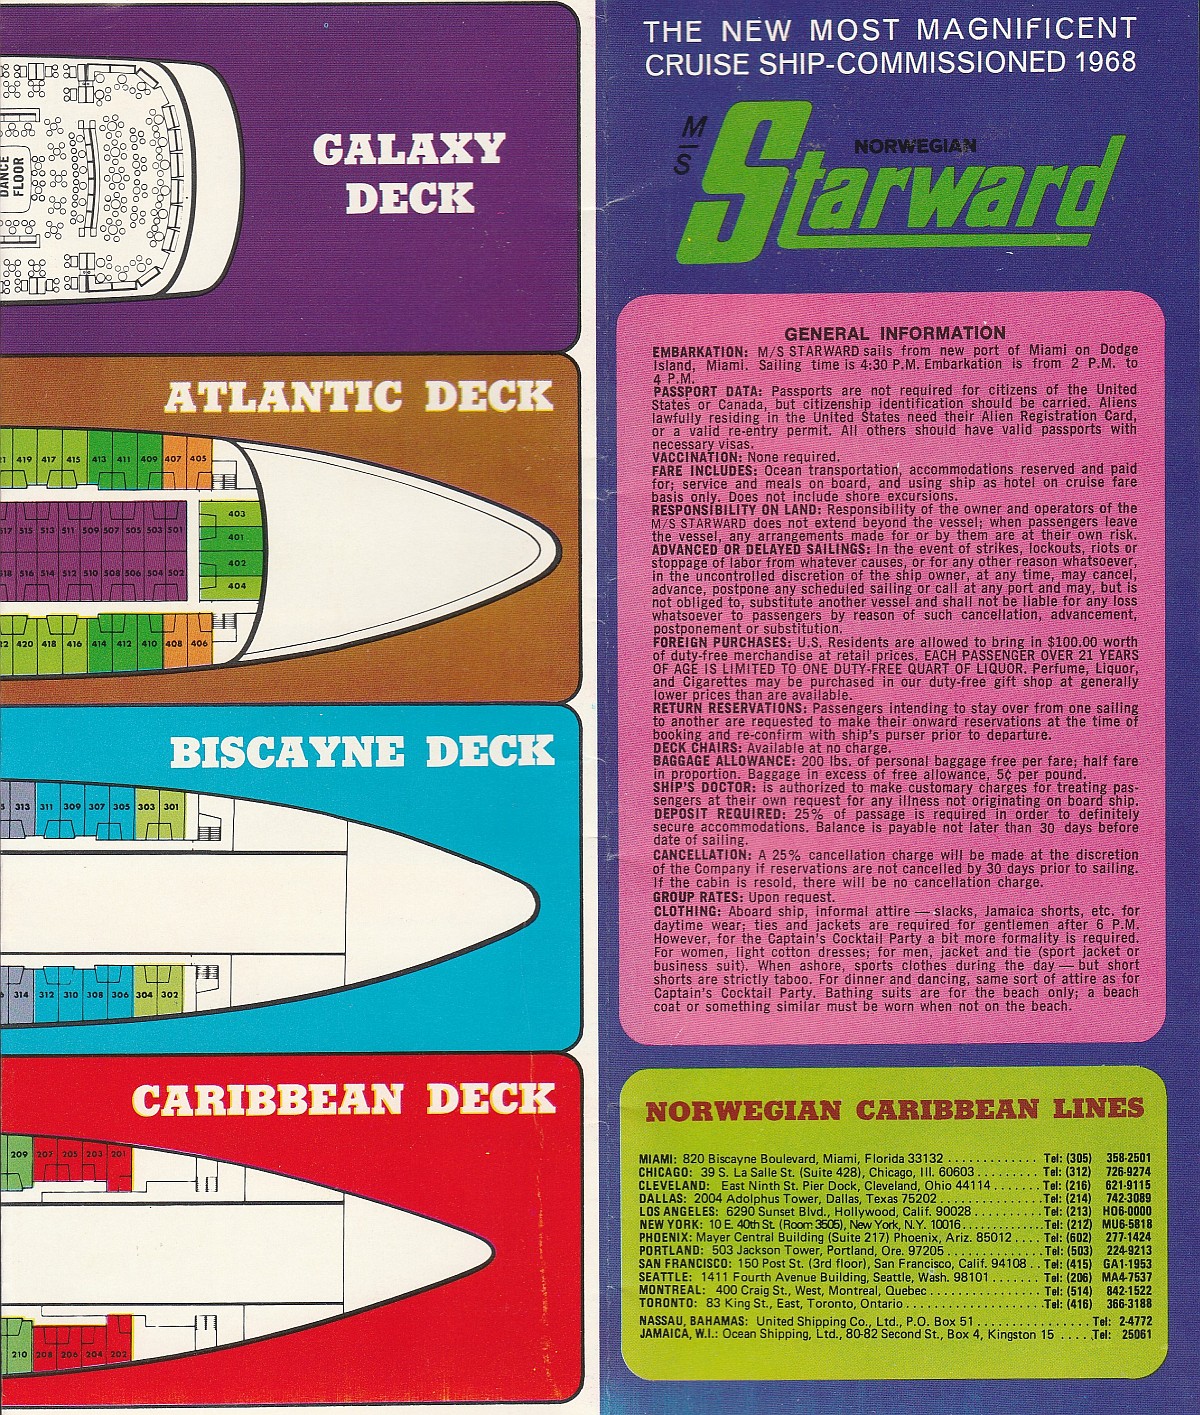 ms Starward Forward deck plans (cont'd): General information